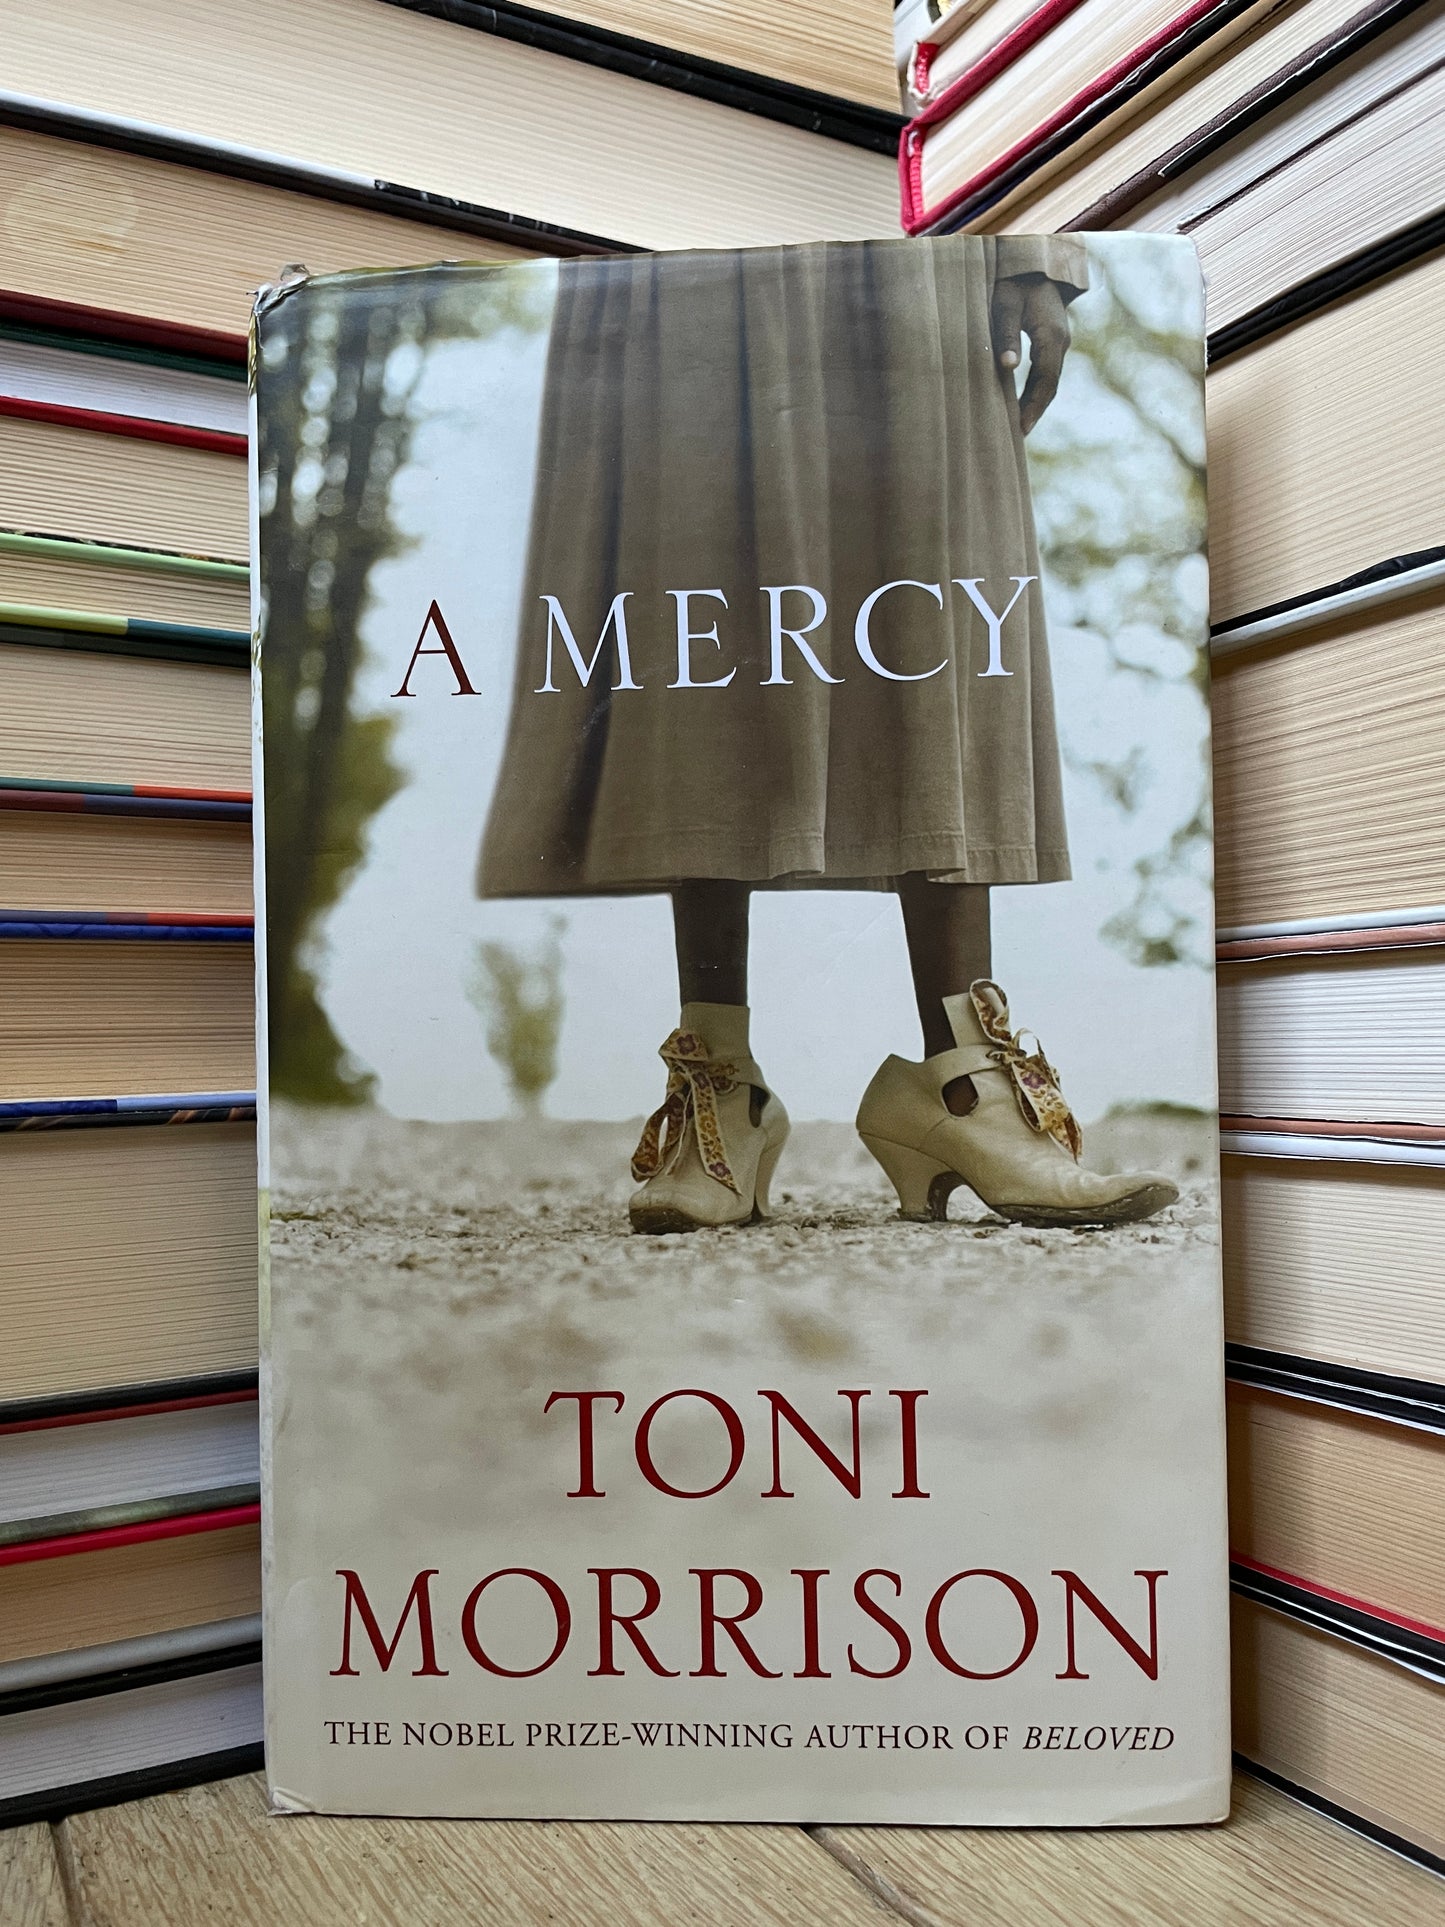 Toni Morrison - A Mercy